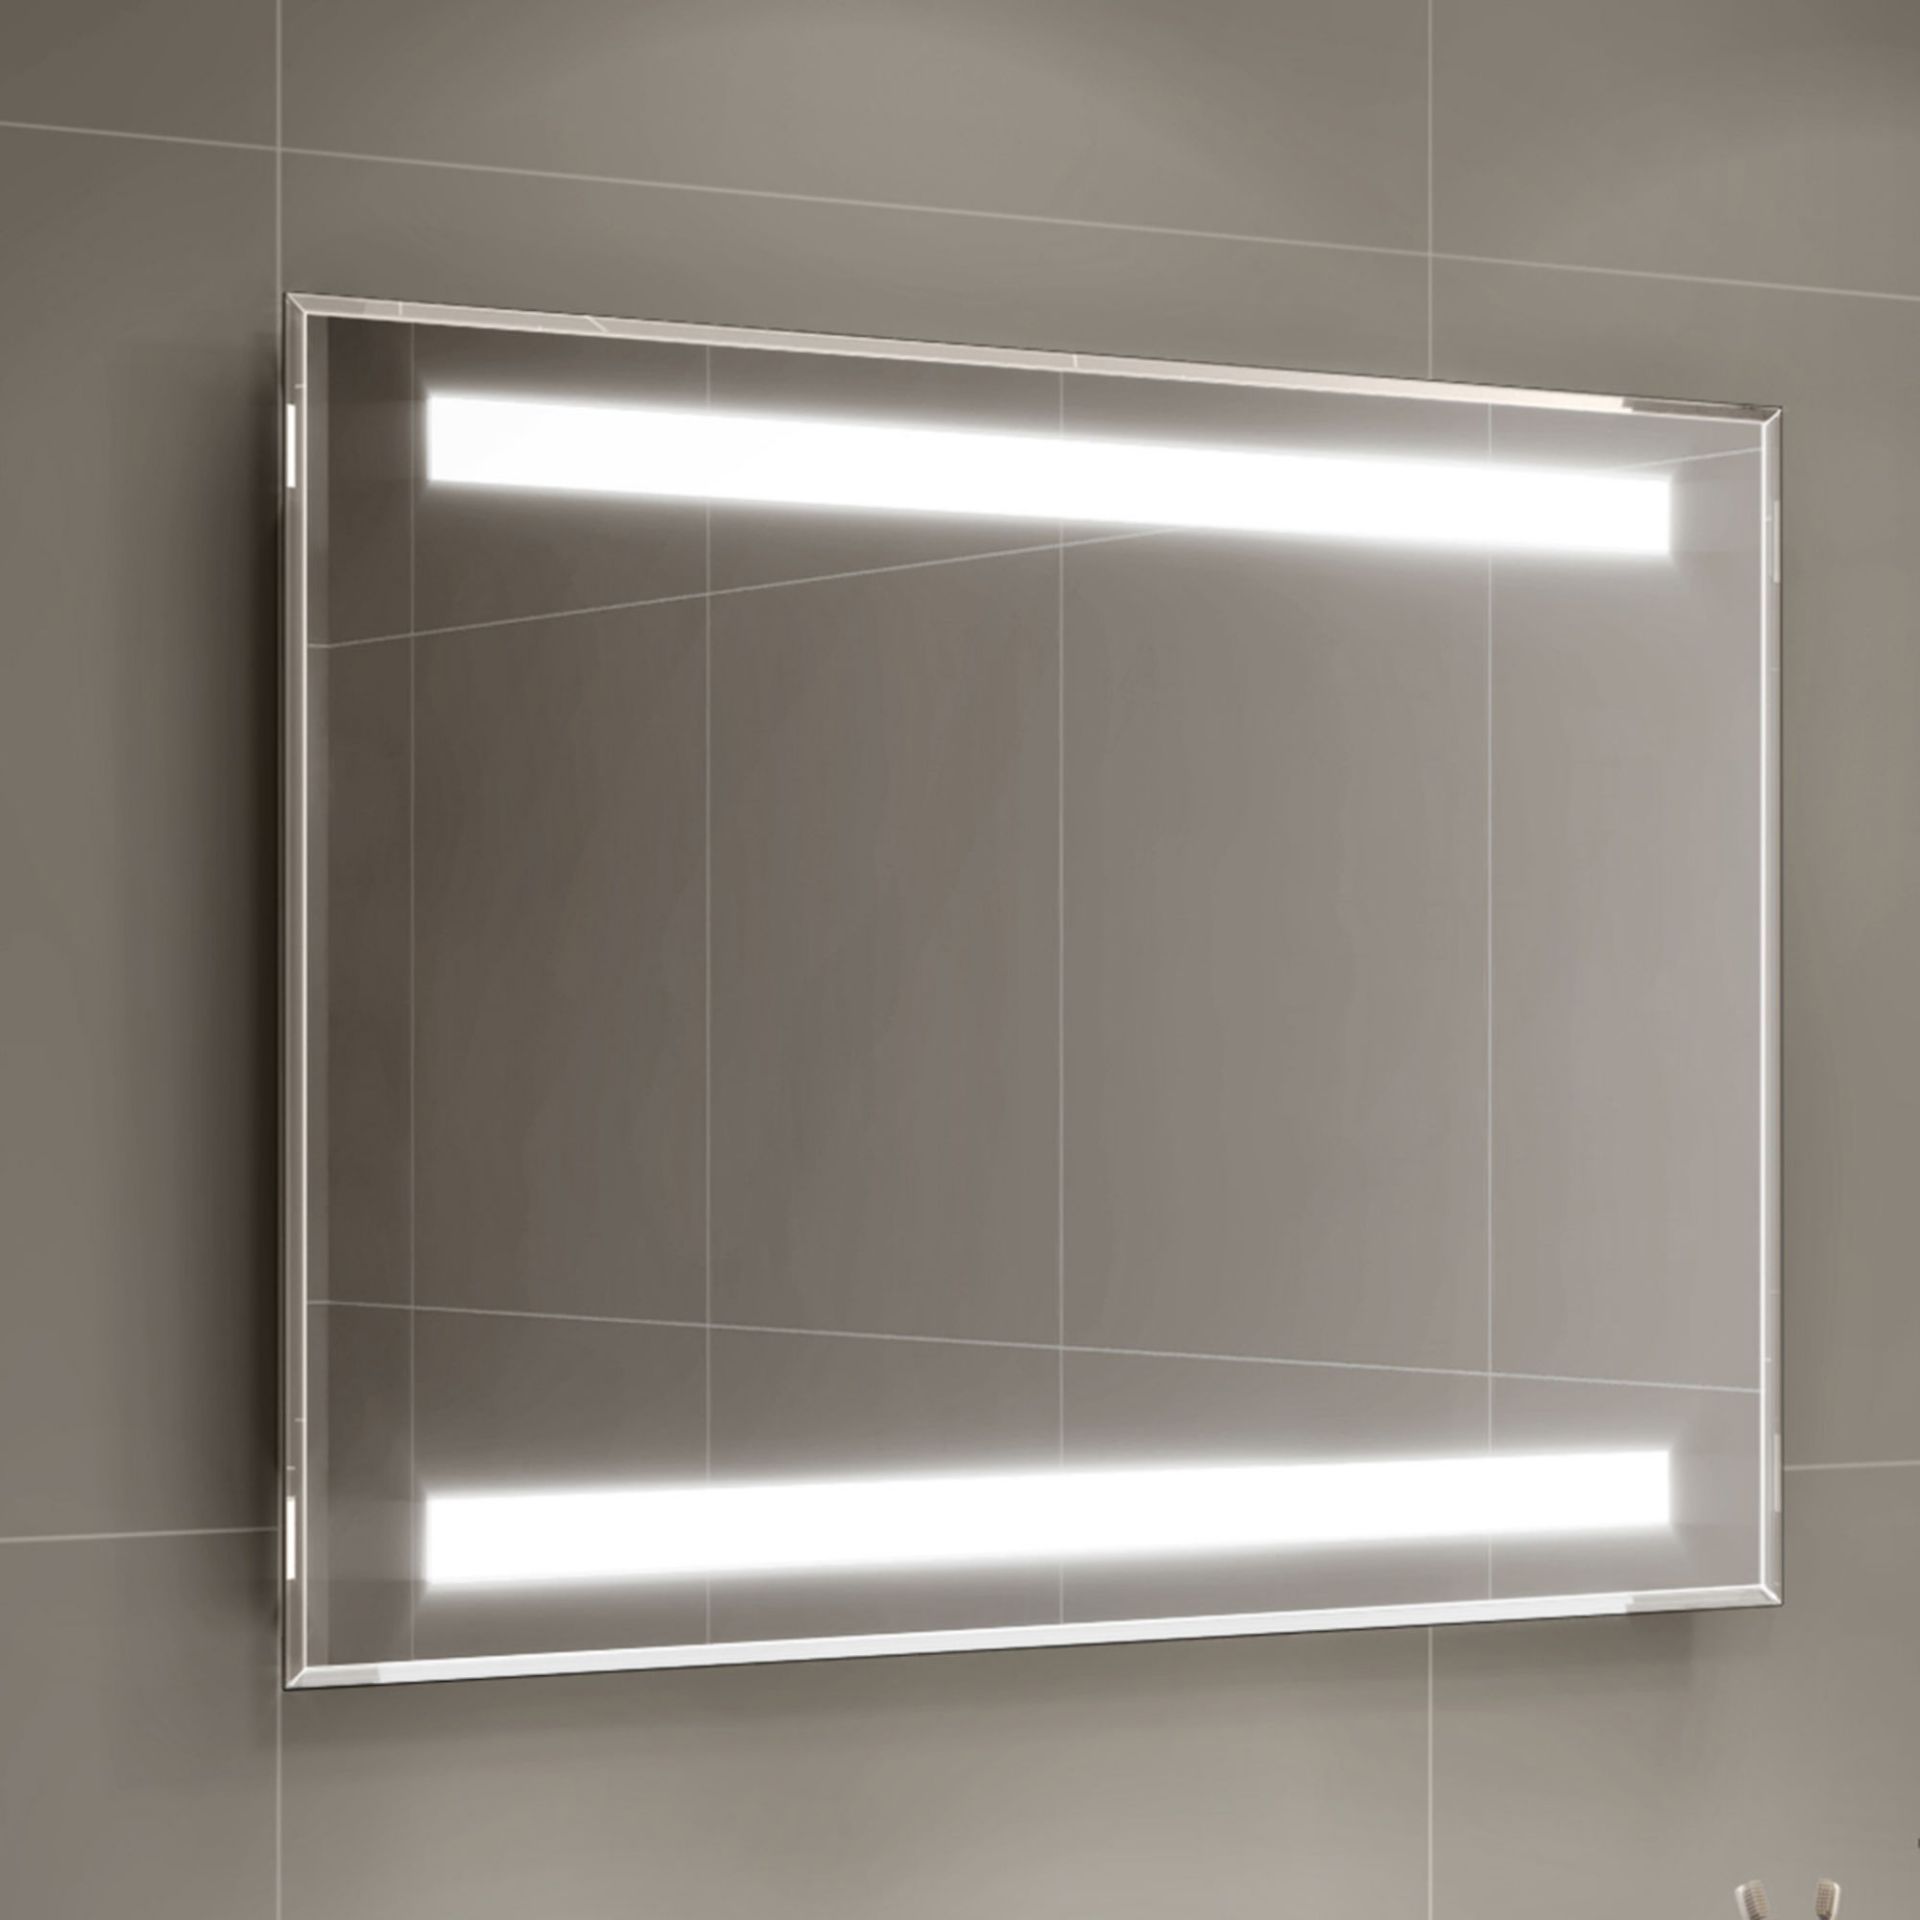 New 60 x 800mm - Omega Illuminated Led Mirror . RRP £499.99.Ml7003.Flattering Led Lights Provi... - Image 2 of 2